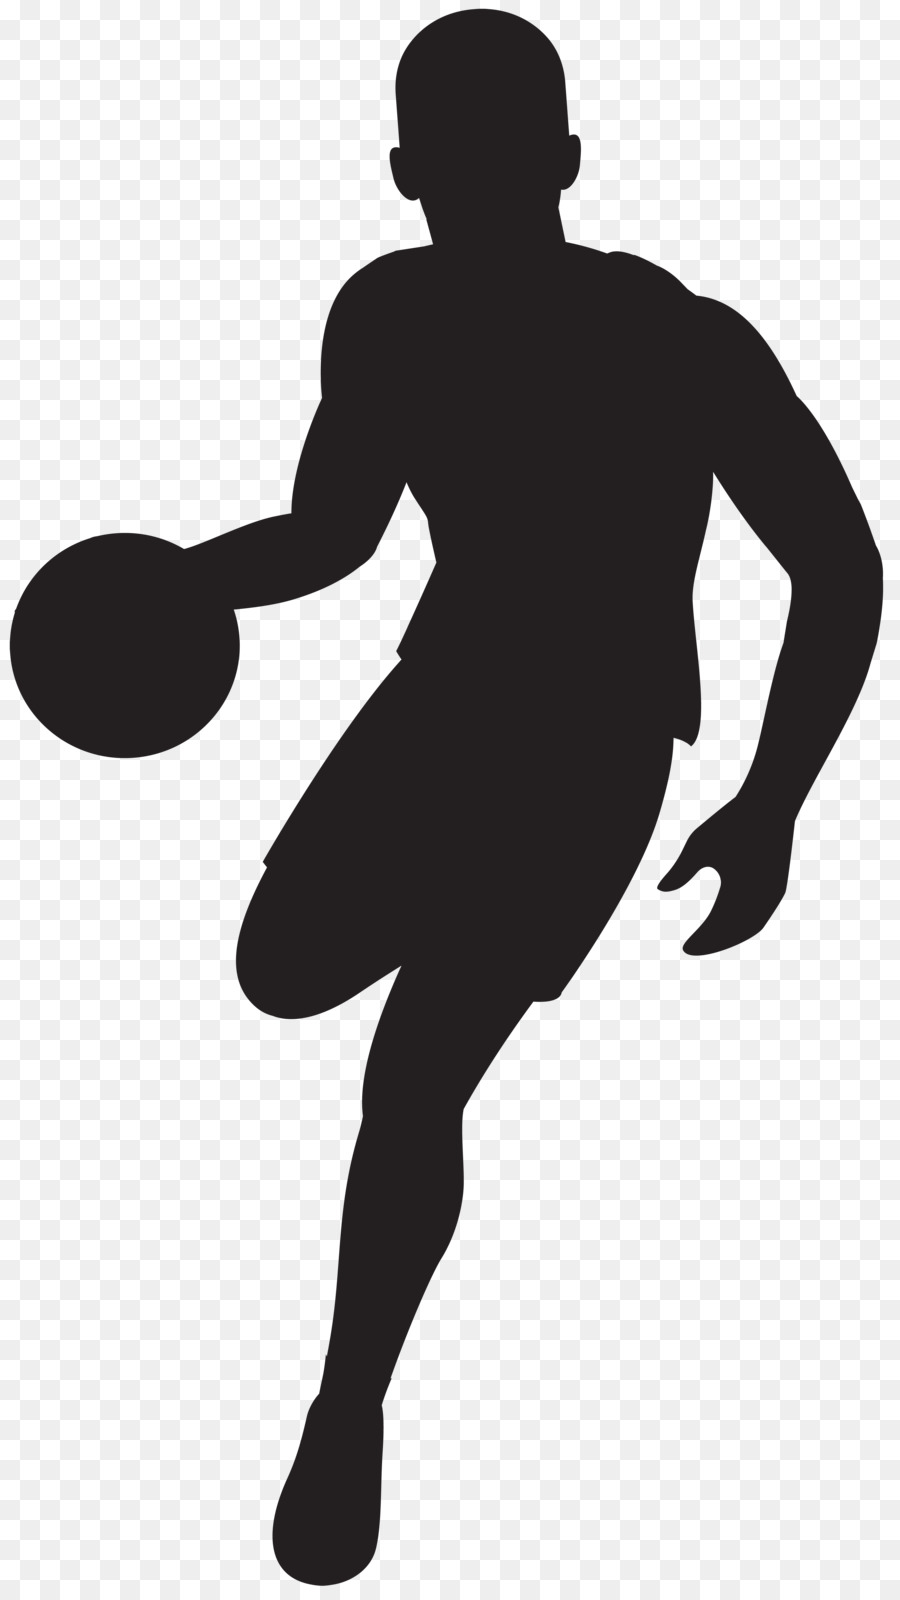 Basketball player Clip art - basketball png download - 4529*8000 - Free Transparent Basketball png Download.